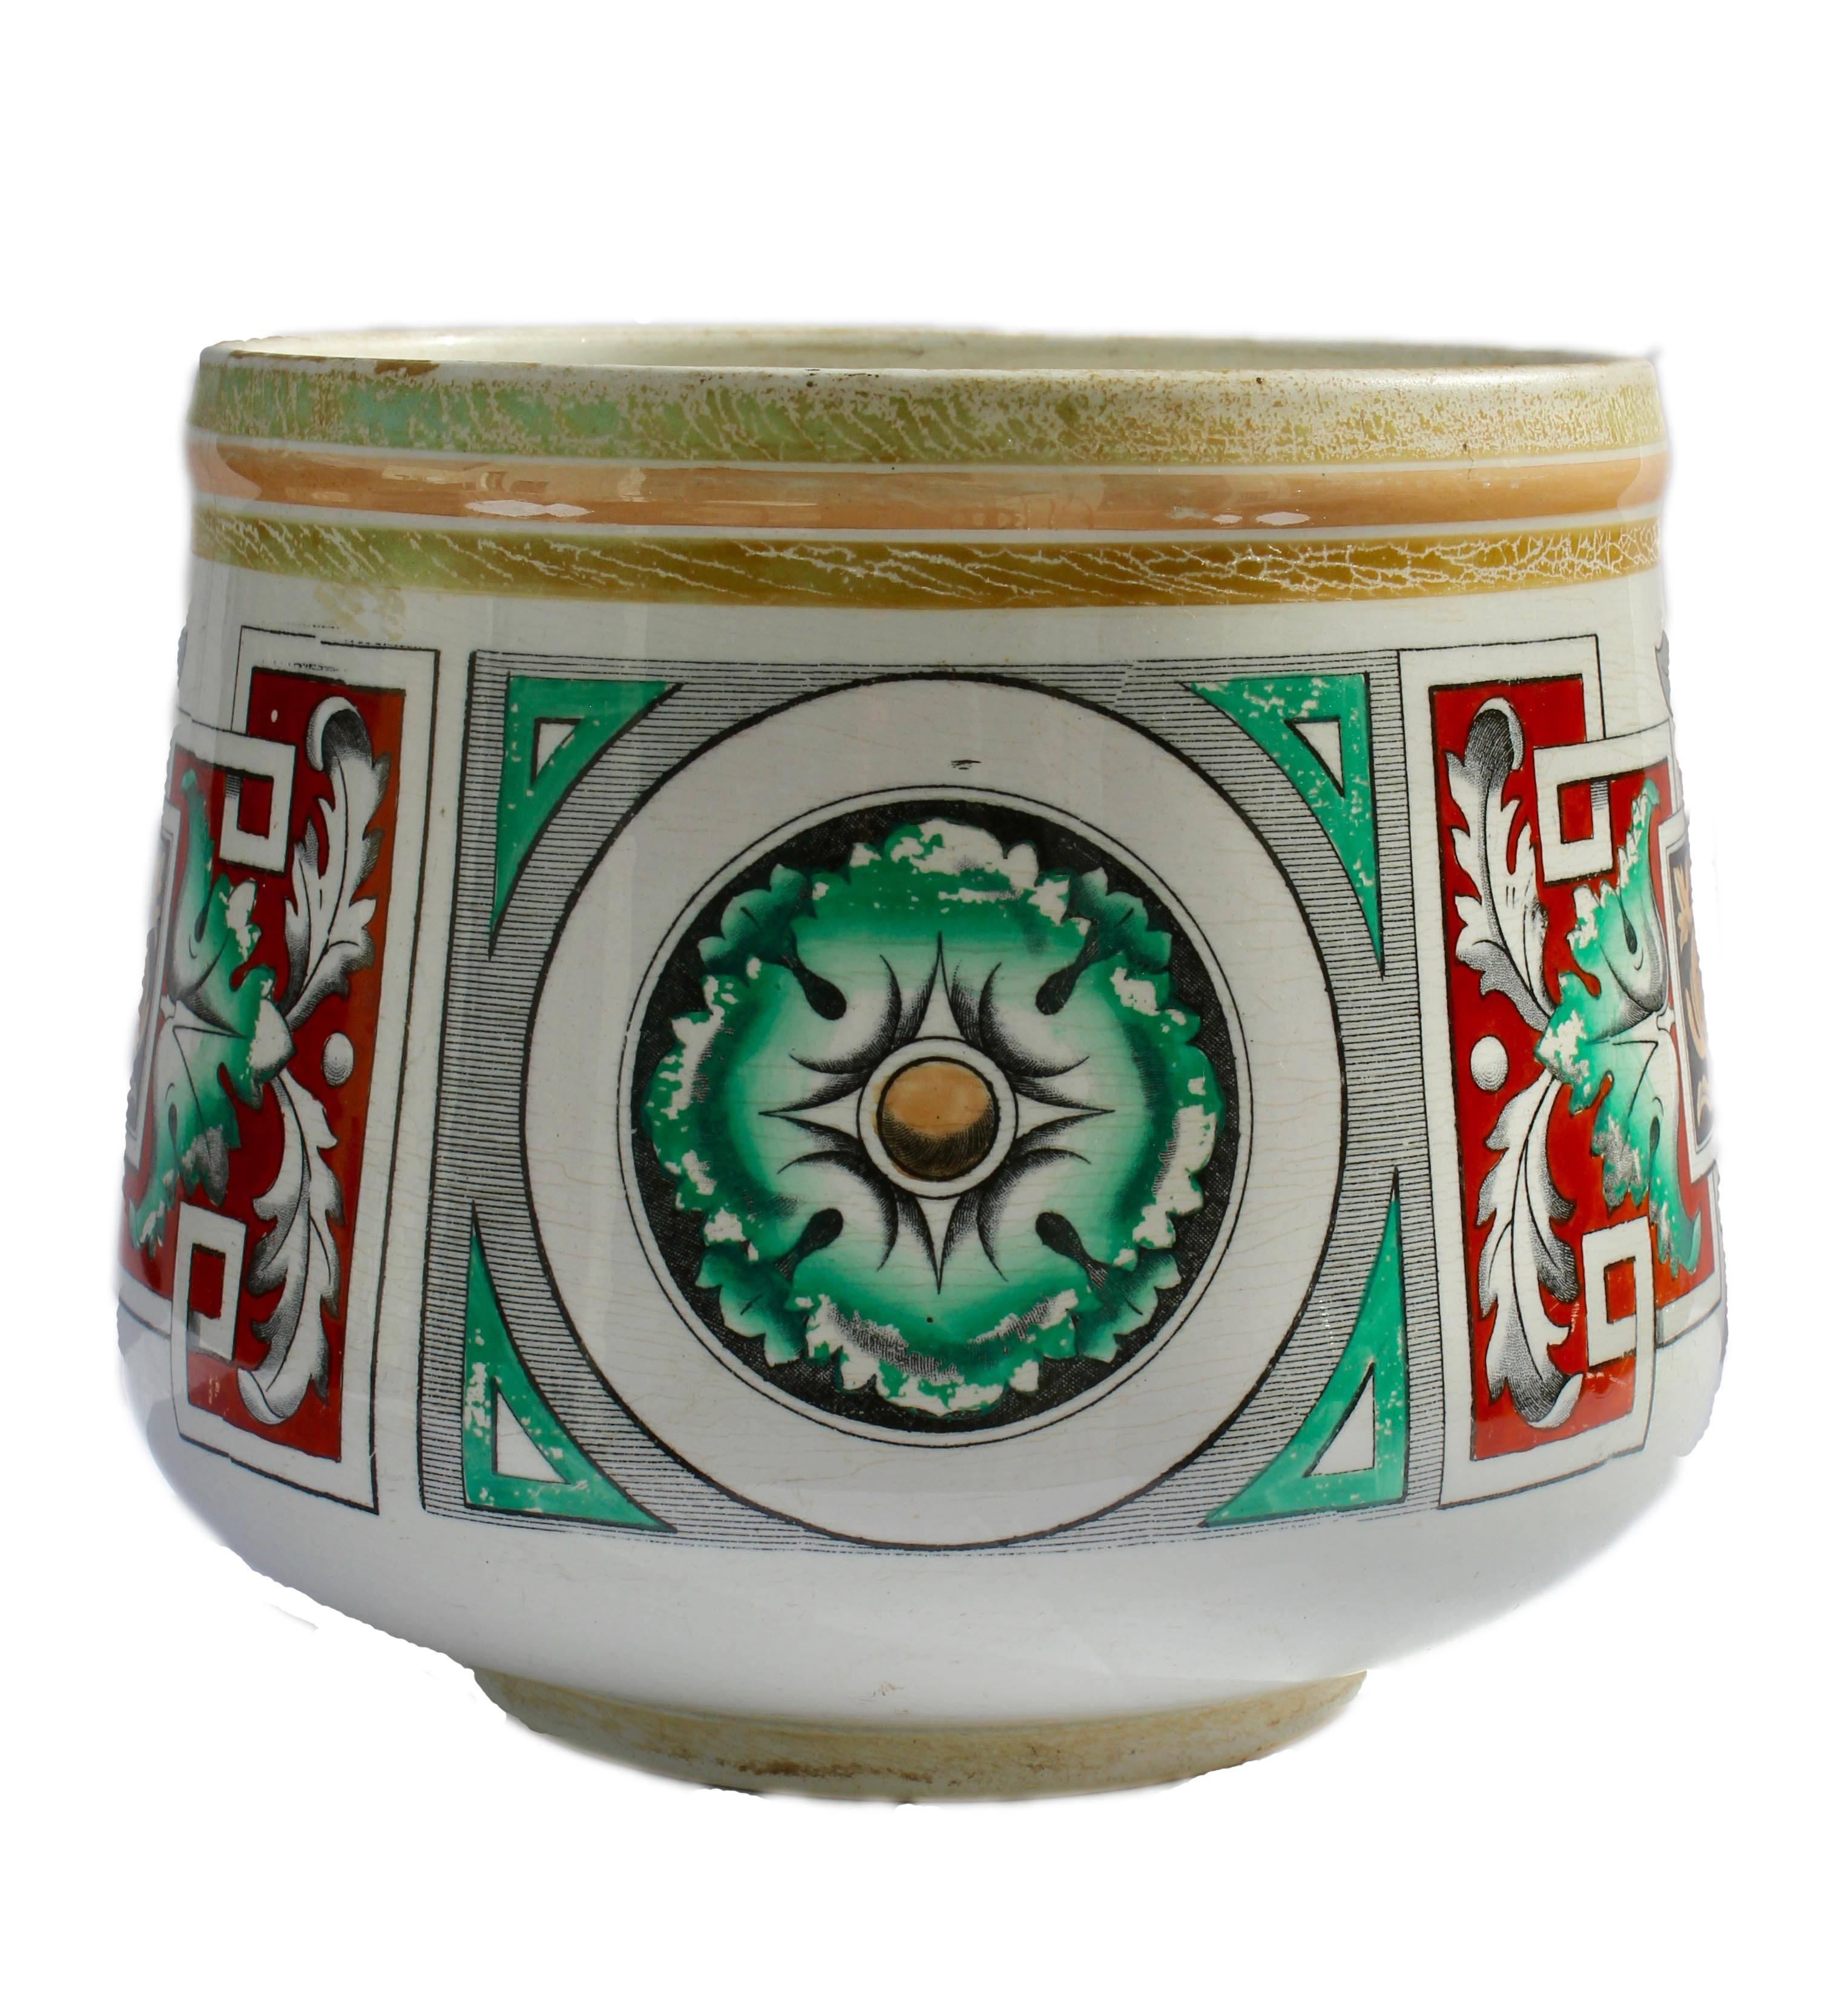 Art Nouveau Rare and Collectable Petrus Regout Jar, circa 1870